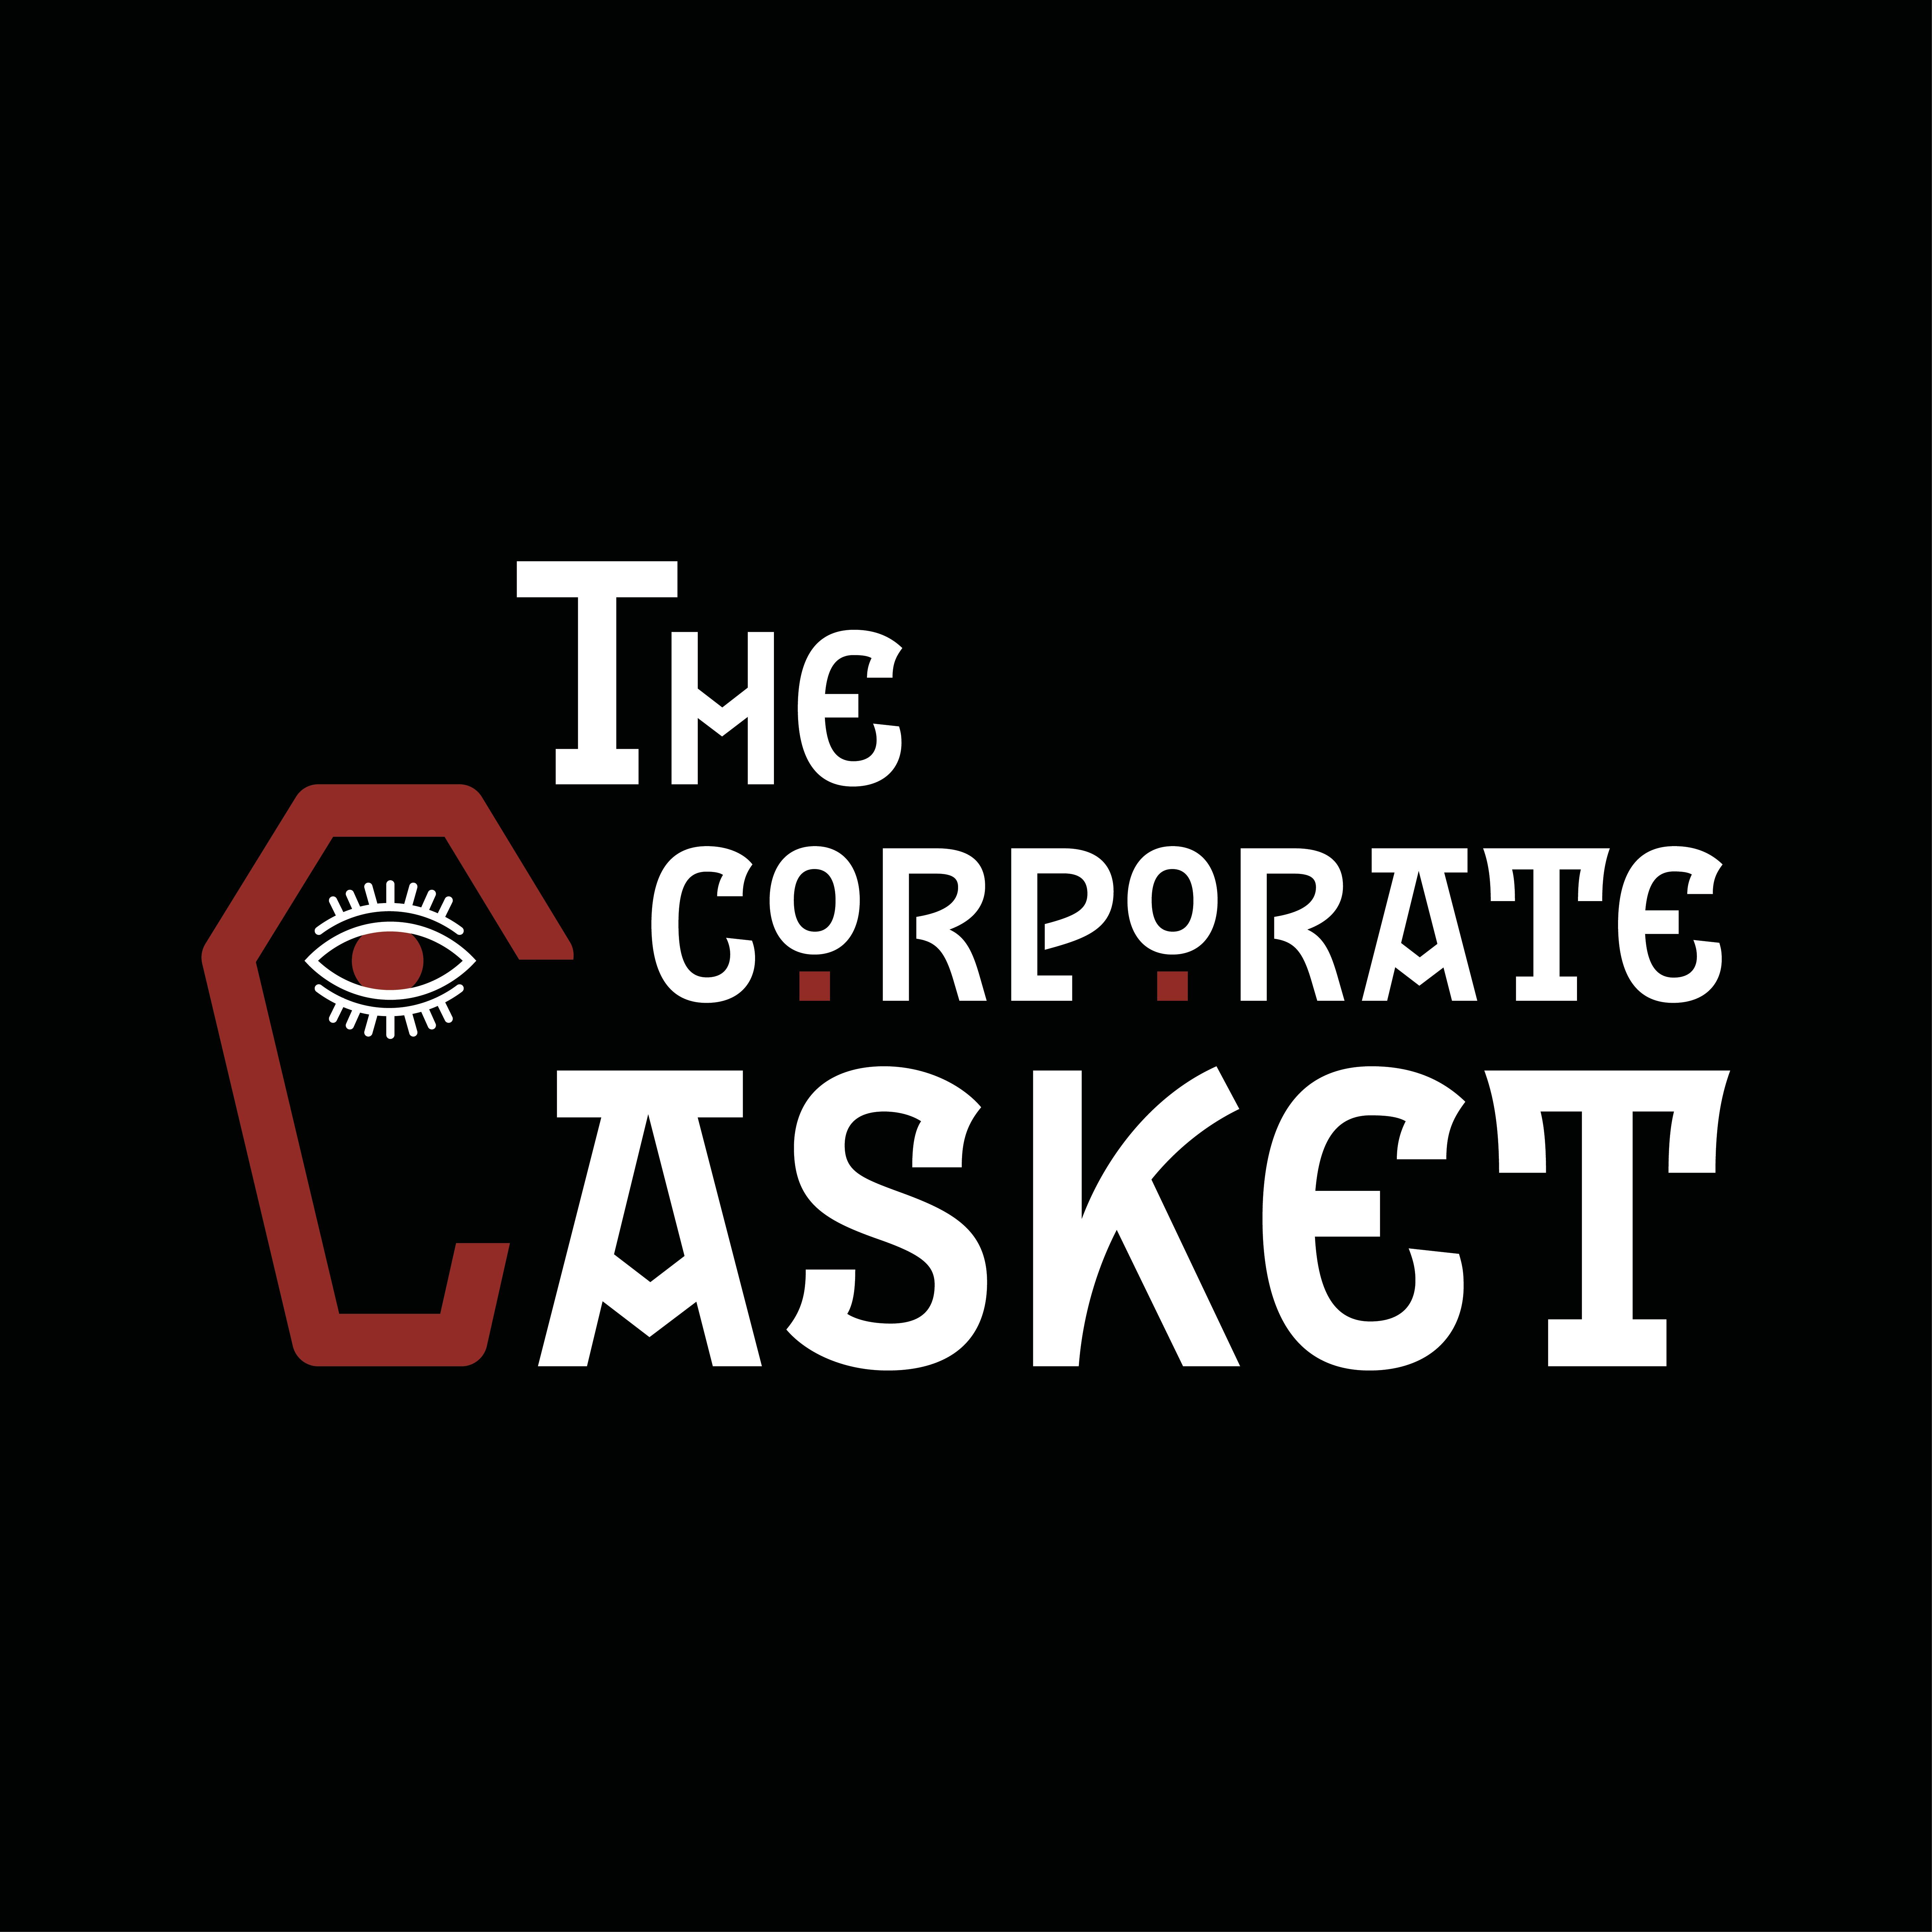 Goodwill: Corporate Casket